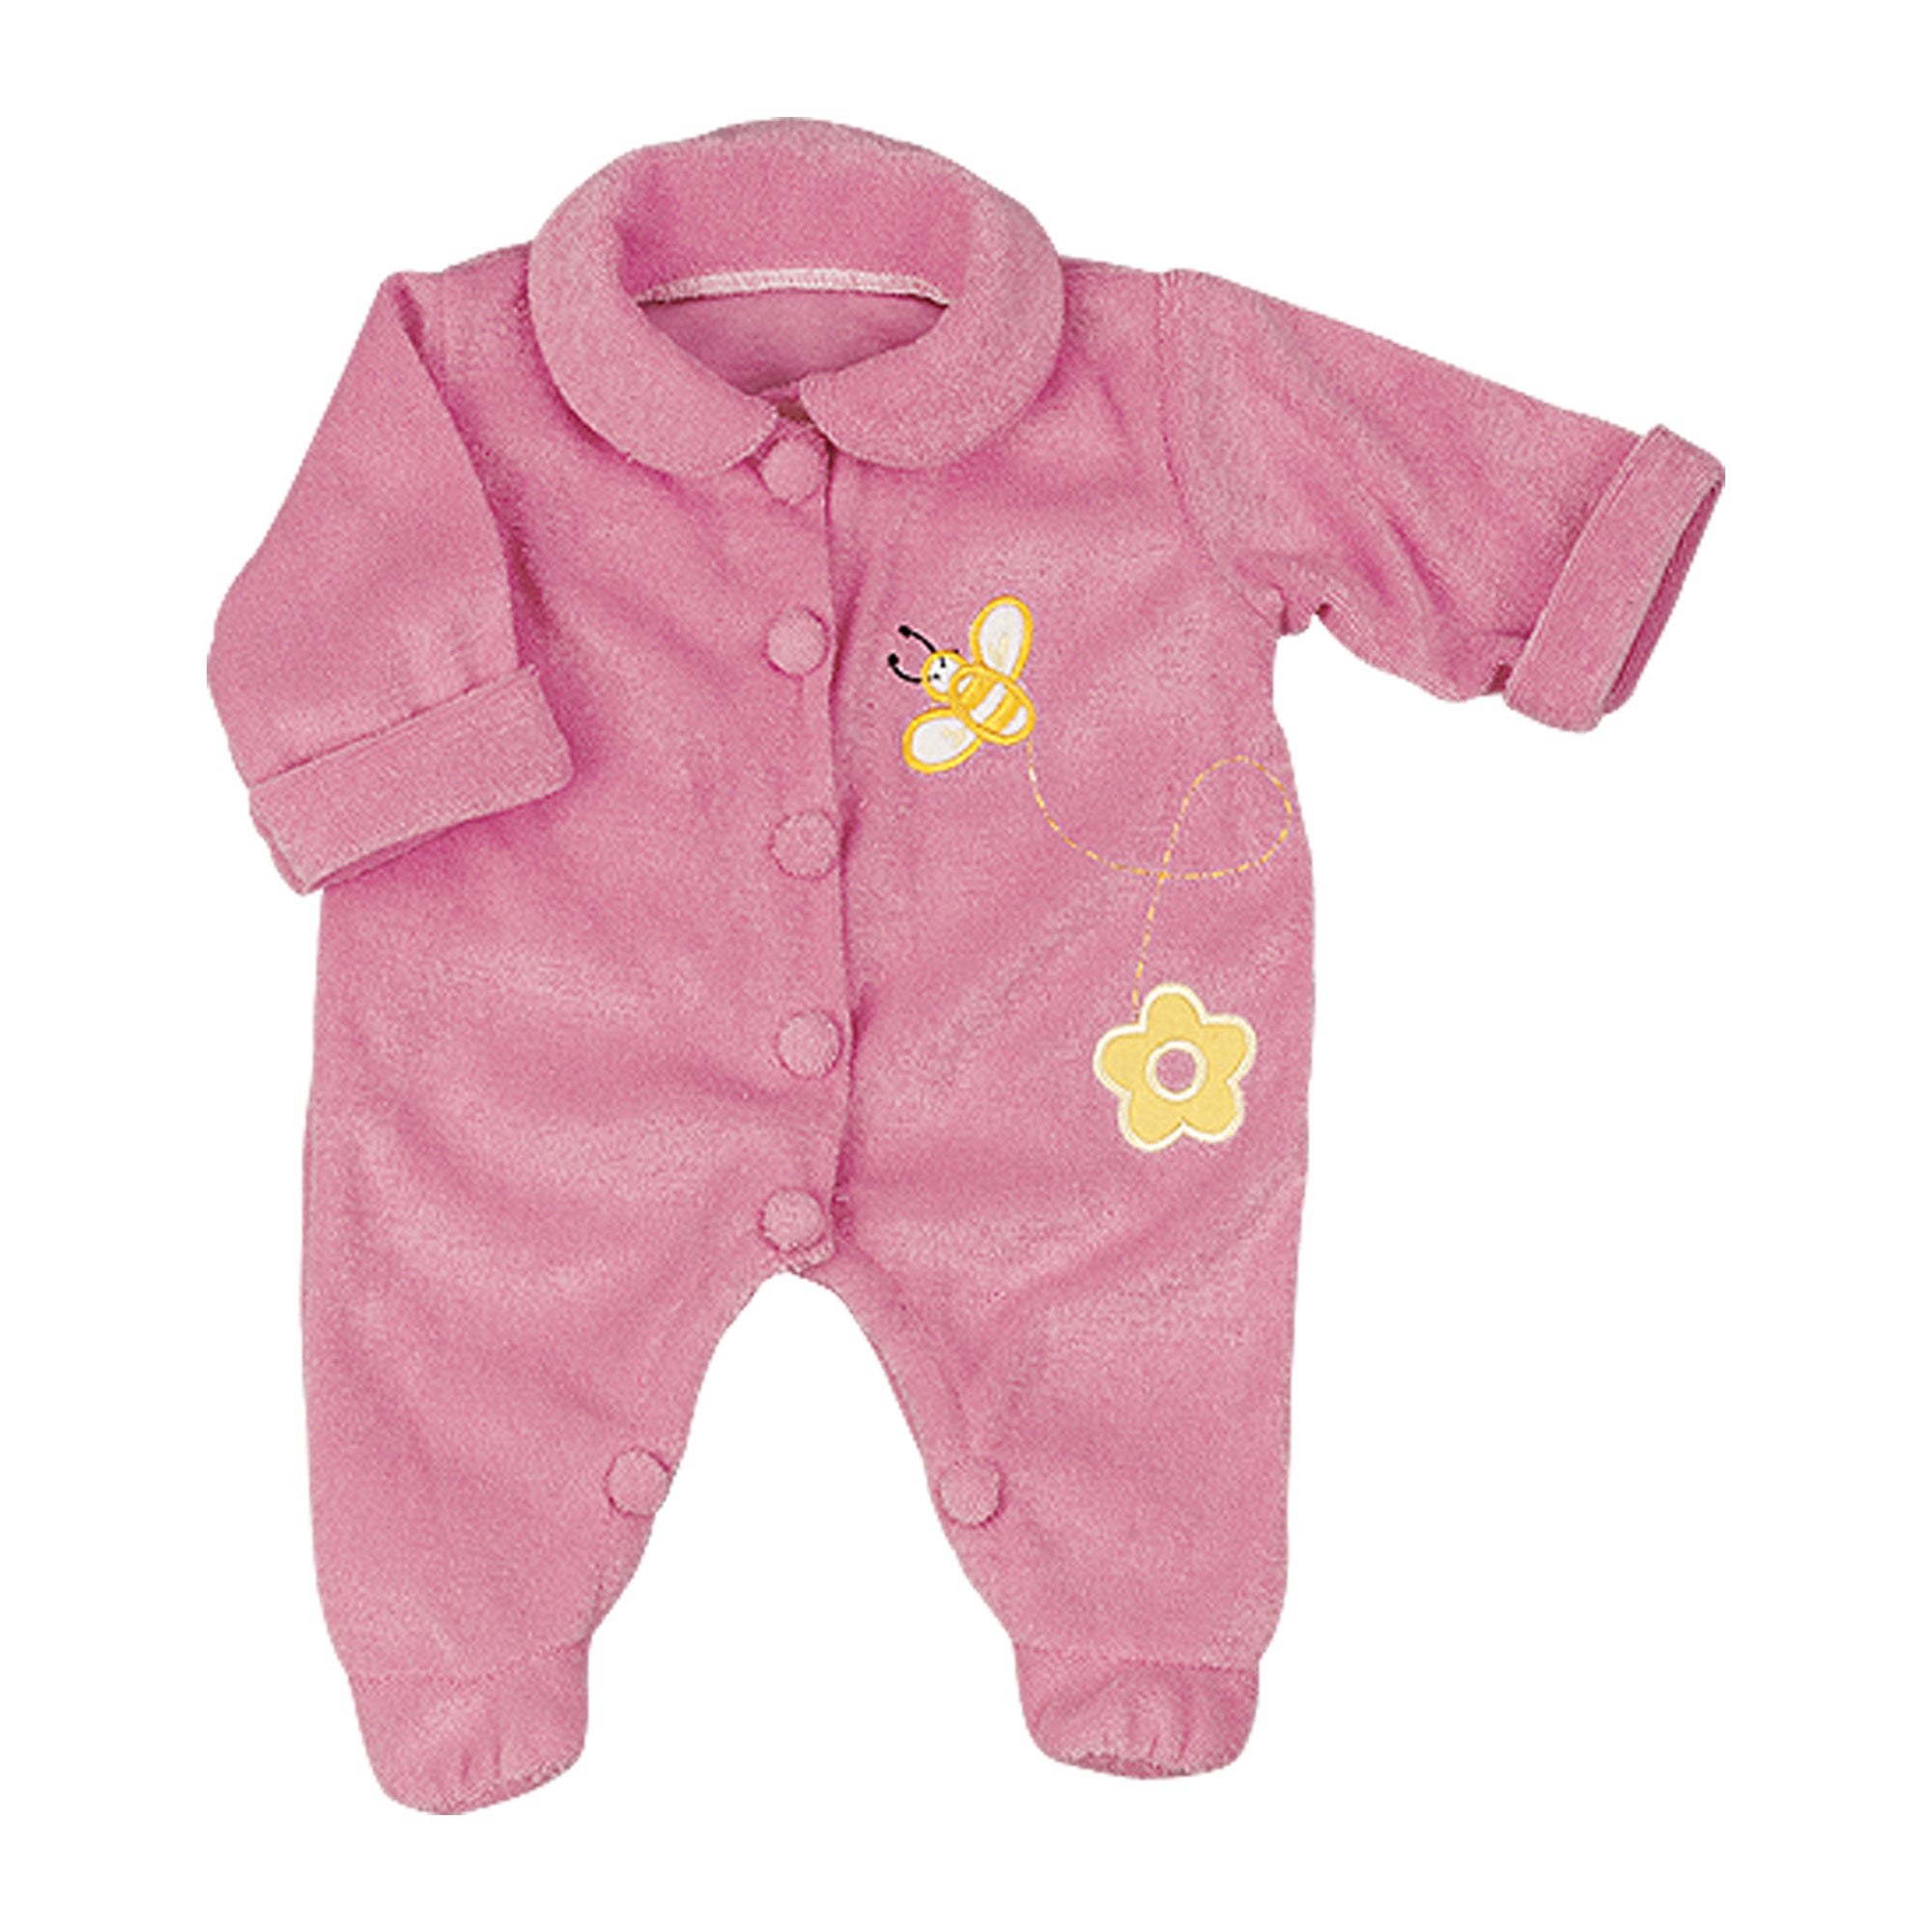 Sophia’s Super Cute Terrycloth Bumblebee Long-Sleeved Embroidered Pajama Sleeper Onesie for 15” Baby Dolls, Pink